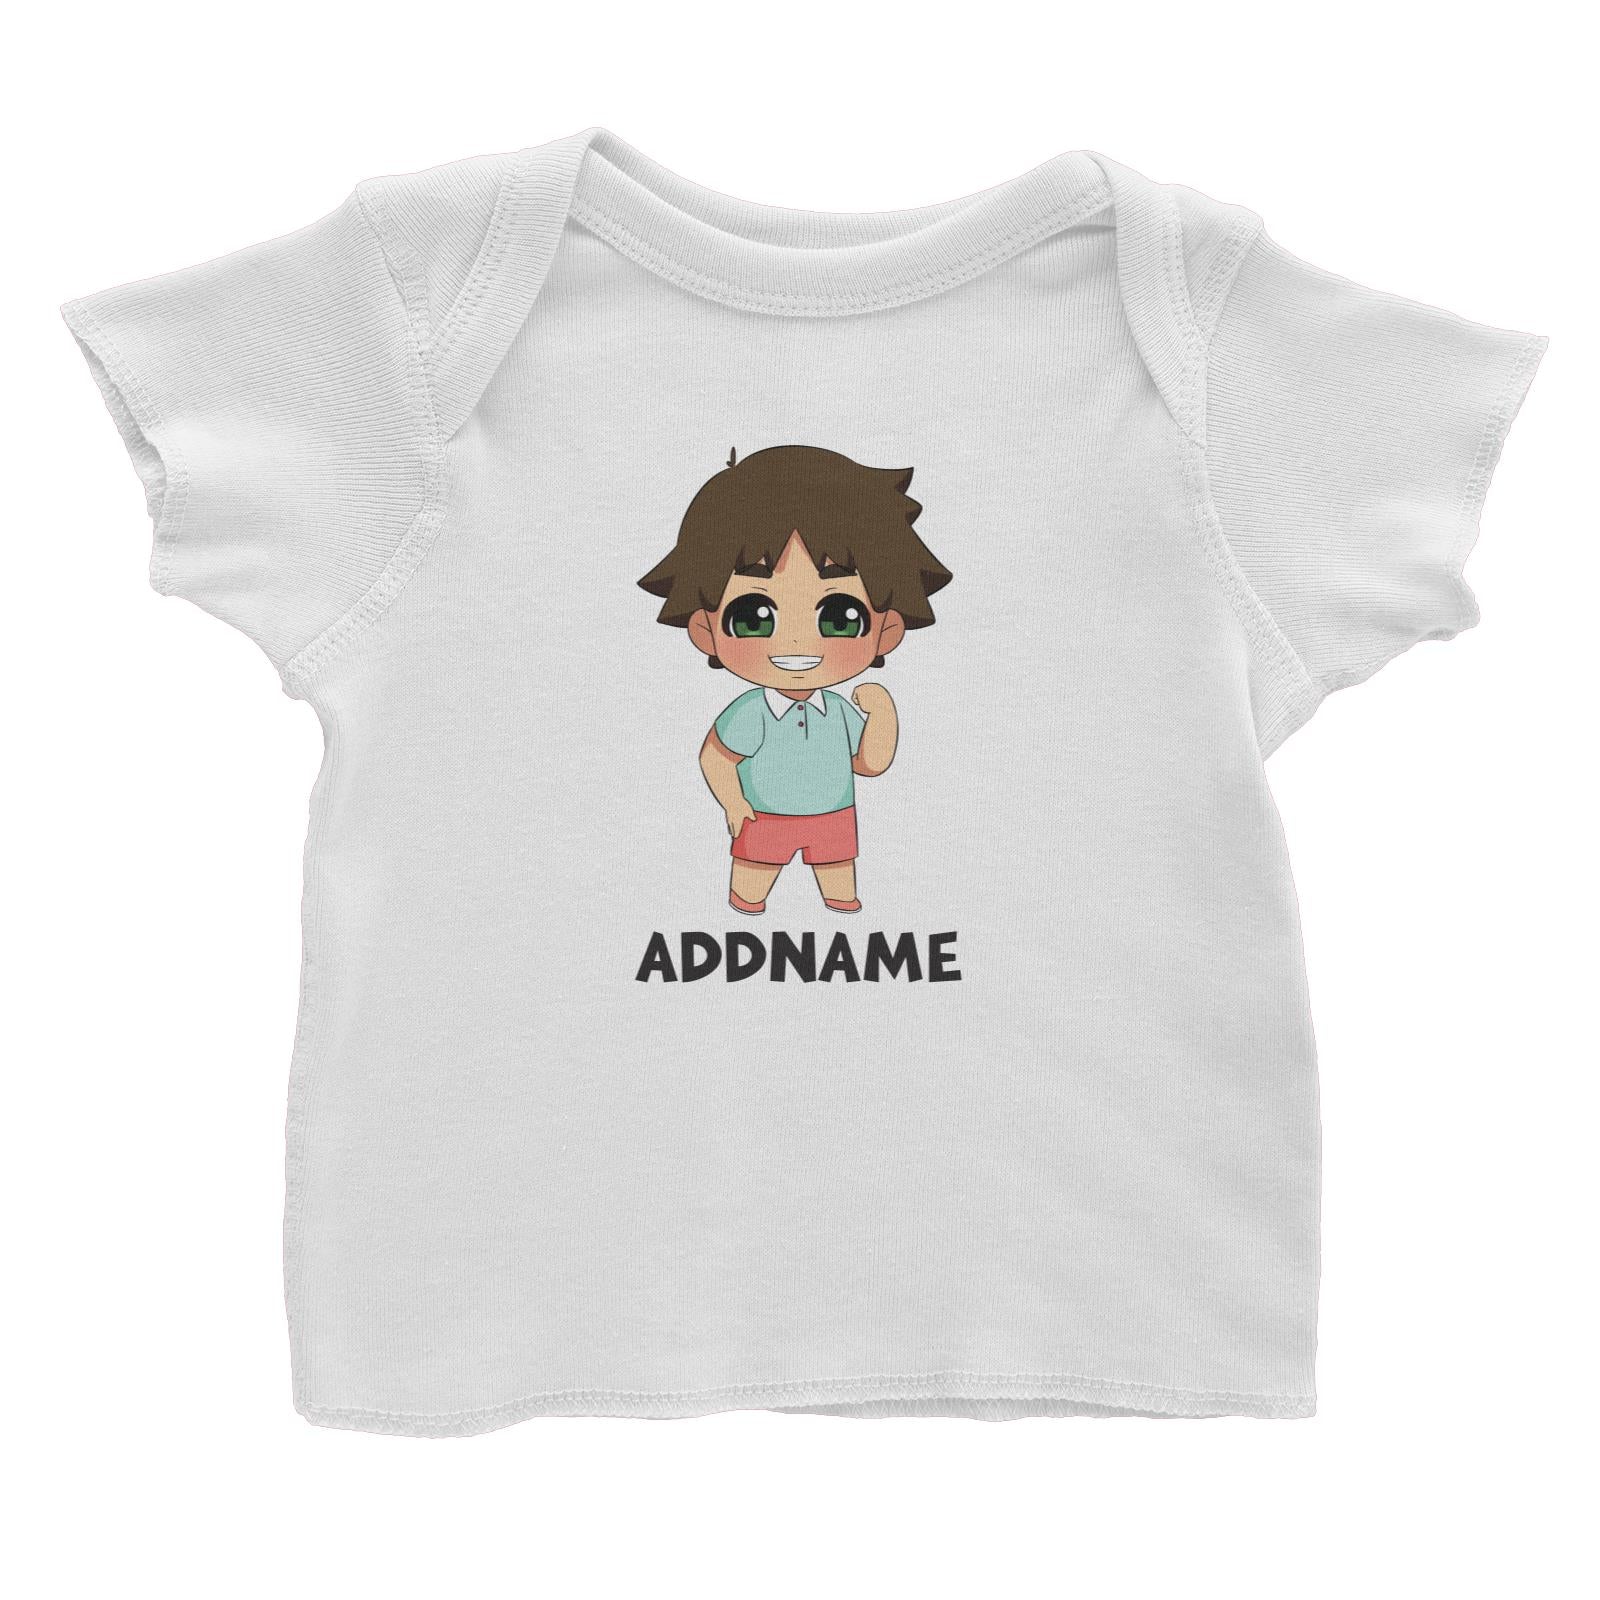 Children's Day Gift Series Little Boy Addname Baby T-Shirt